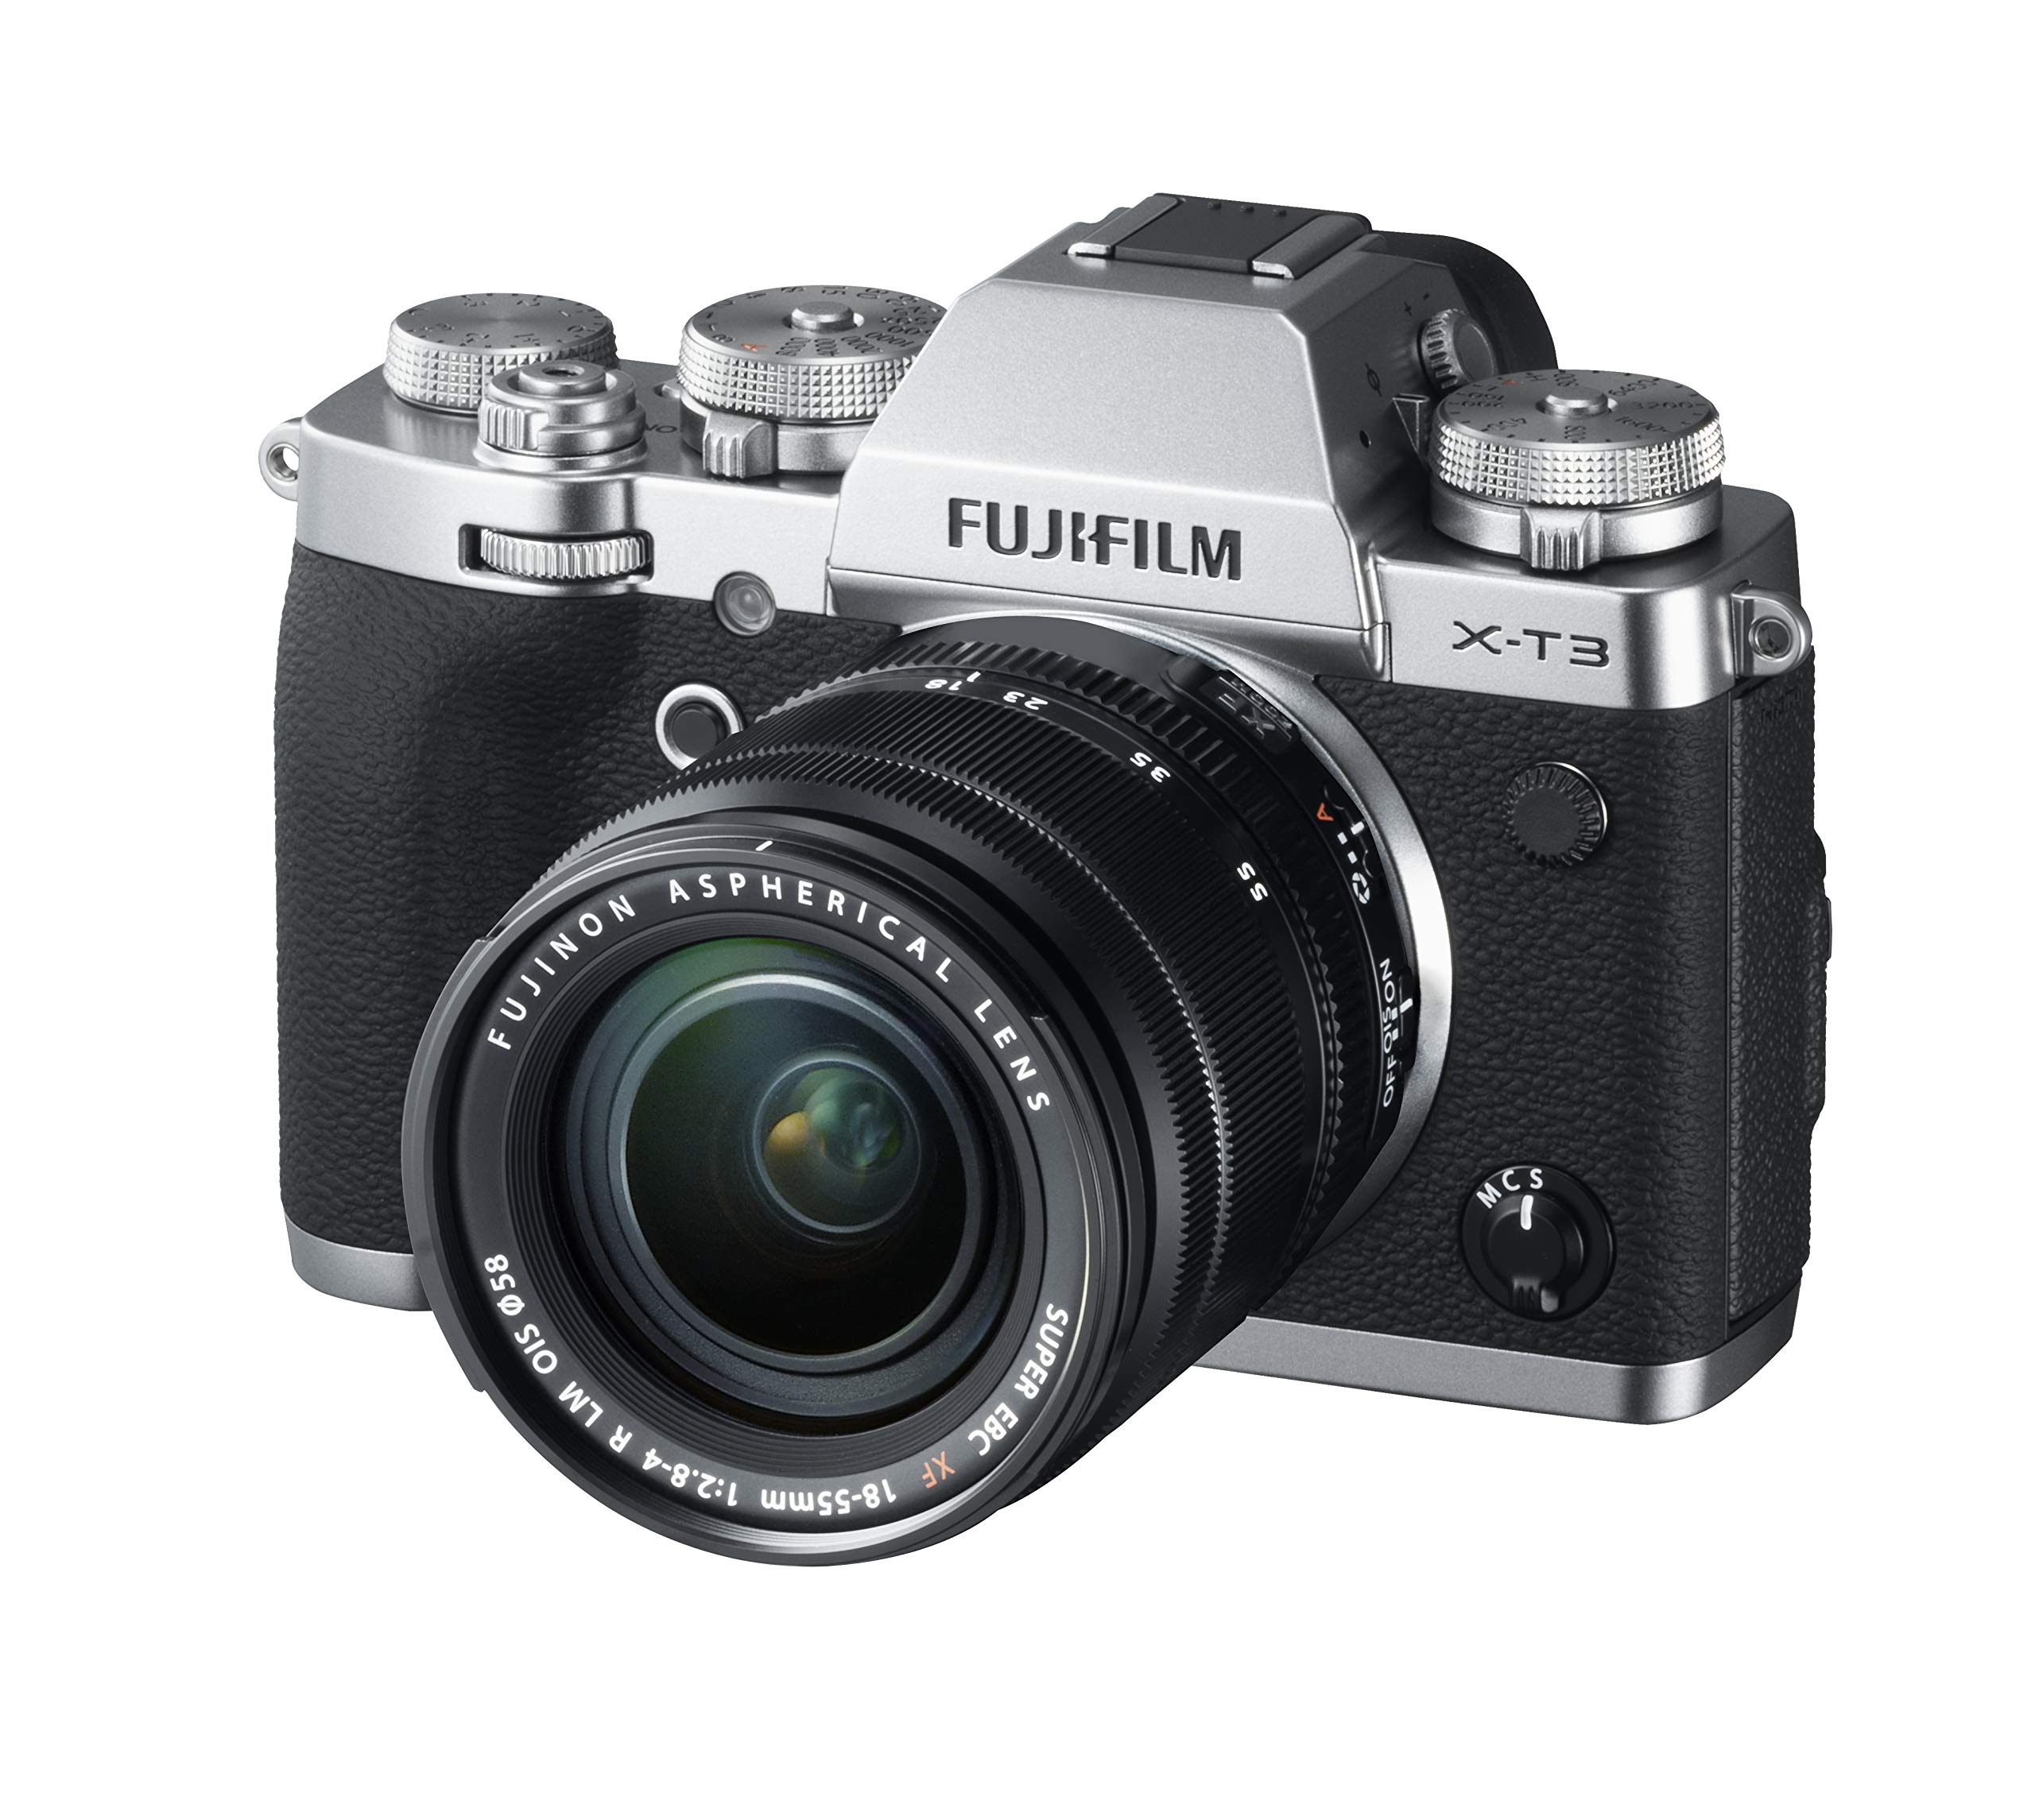 Fujifilm X-T3 Mirrorless Digital Camera, Silver with Fujinon XF18-55mm F2.8-4 R LM Optical Image Stabiliser Lens kit